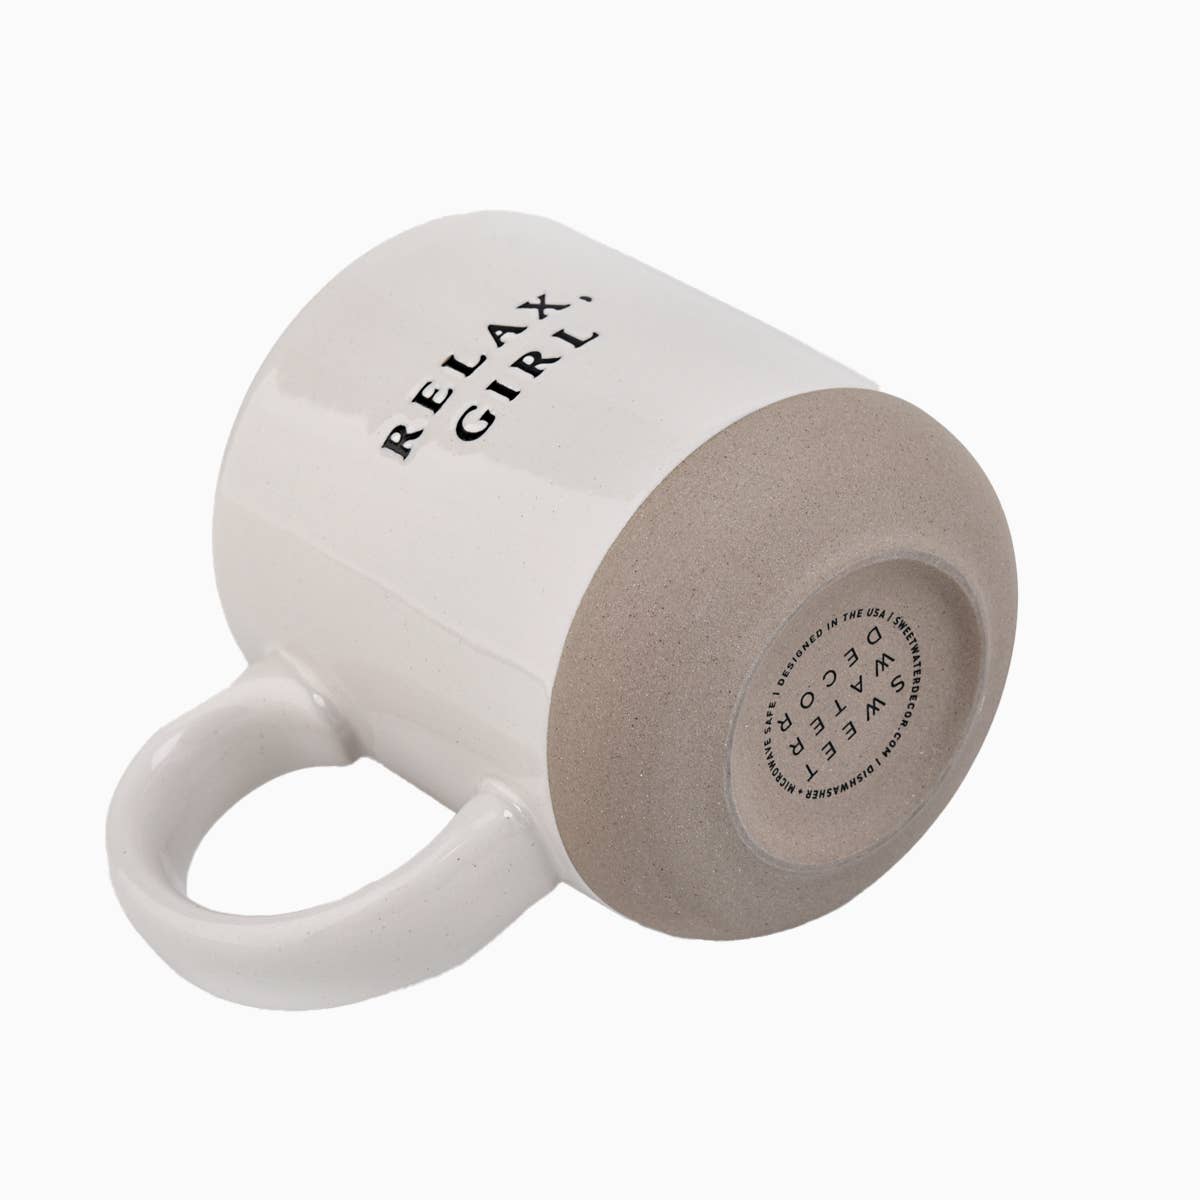 Relax, Girl Stoneware Coffee Mug